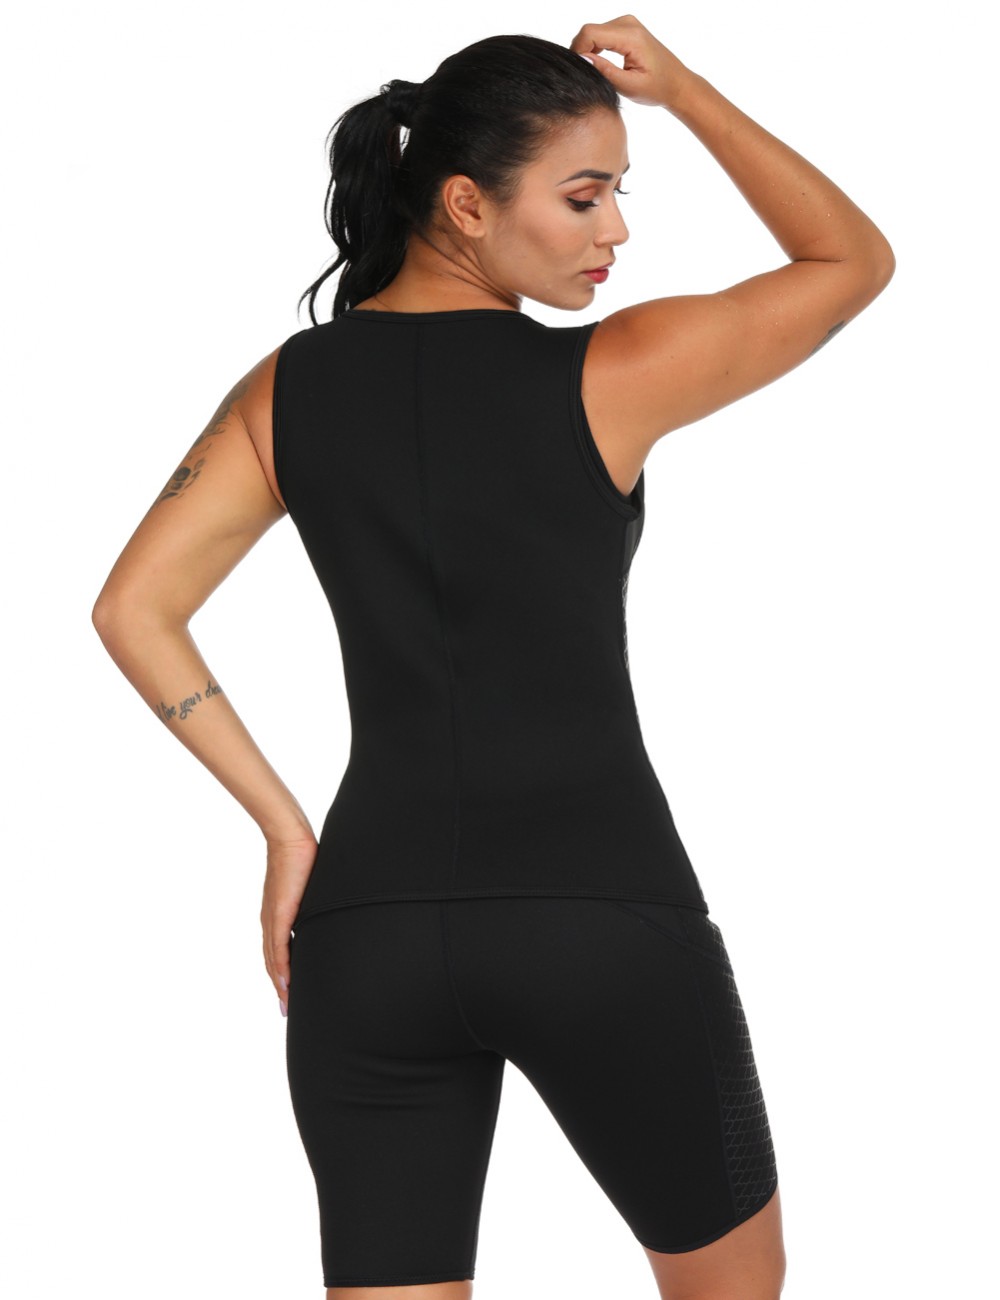 Black Neoprene Print Plus Size Thigh Shaper Side Pockets For Fitness